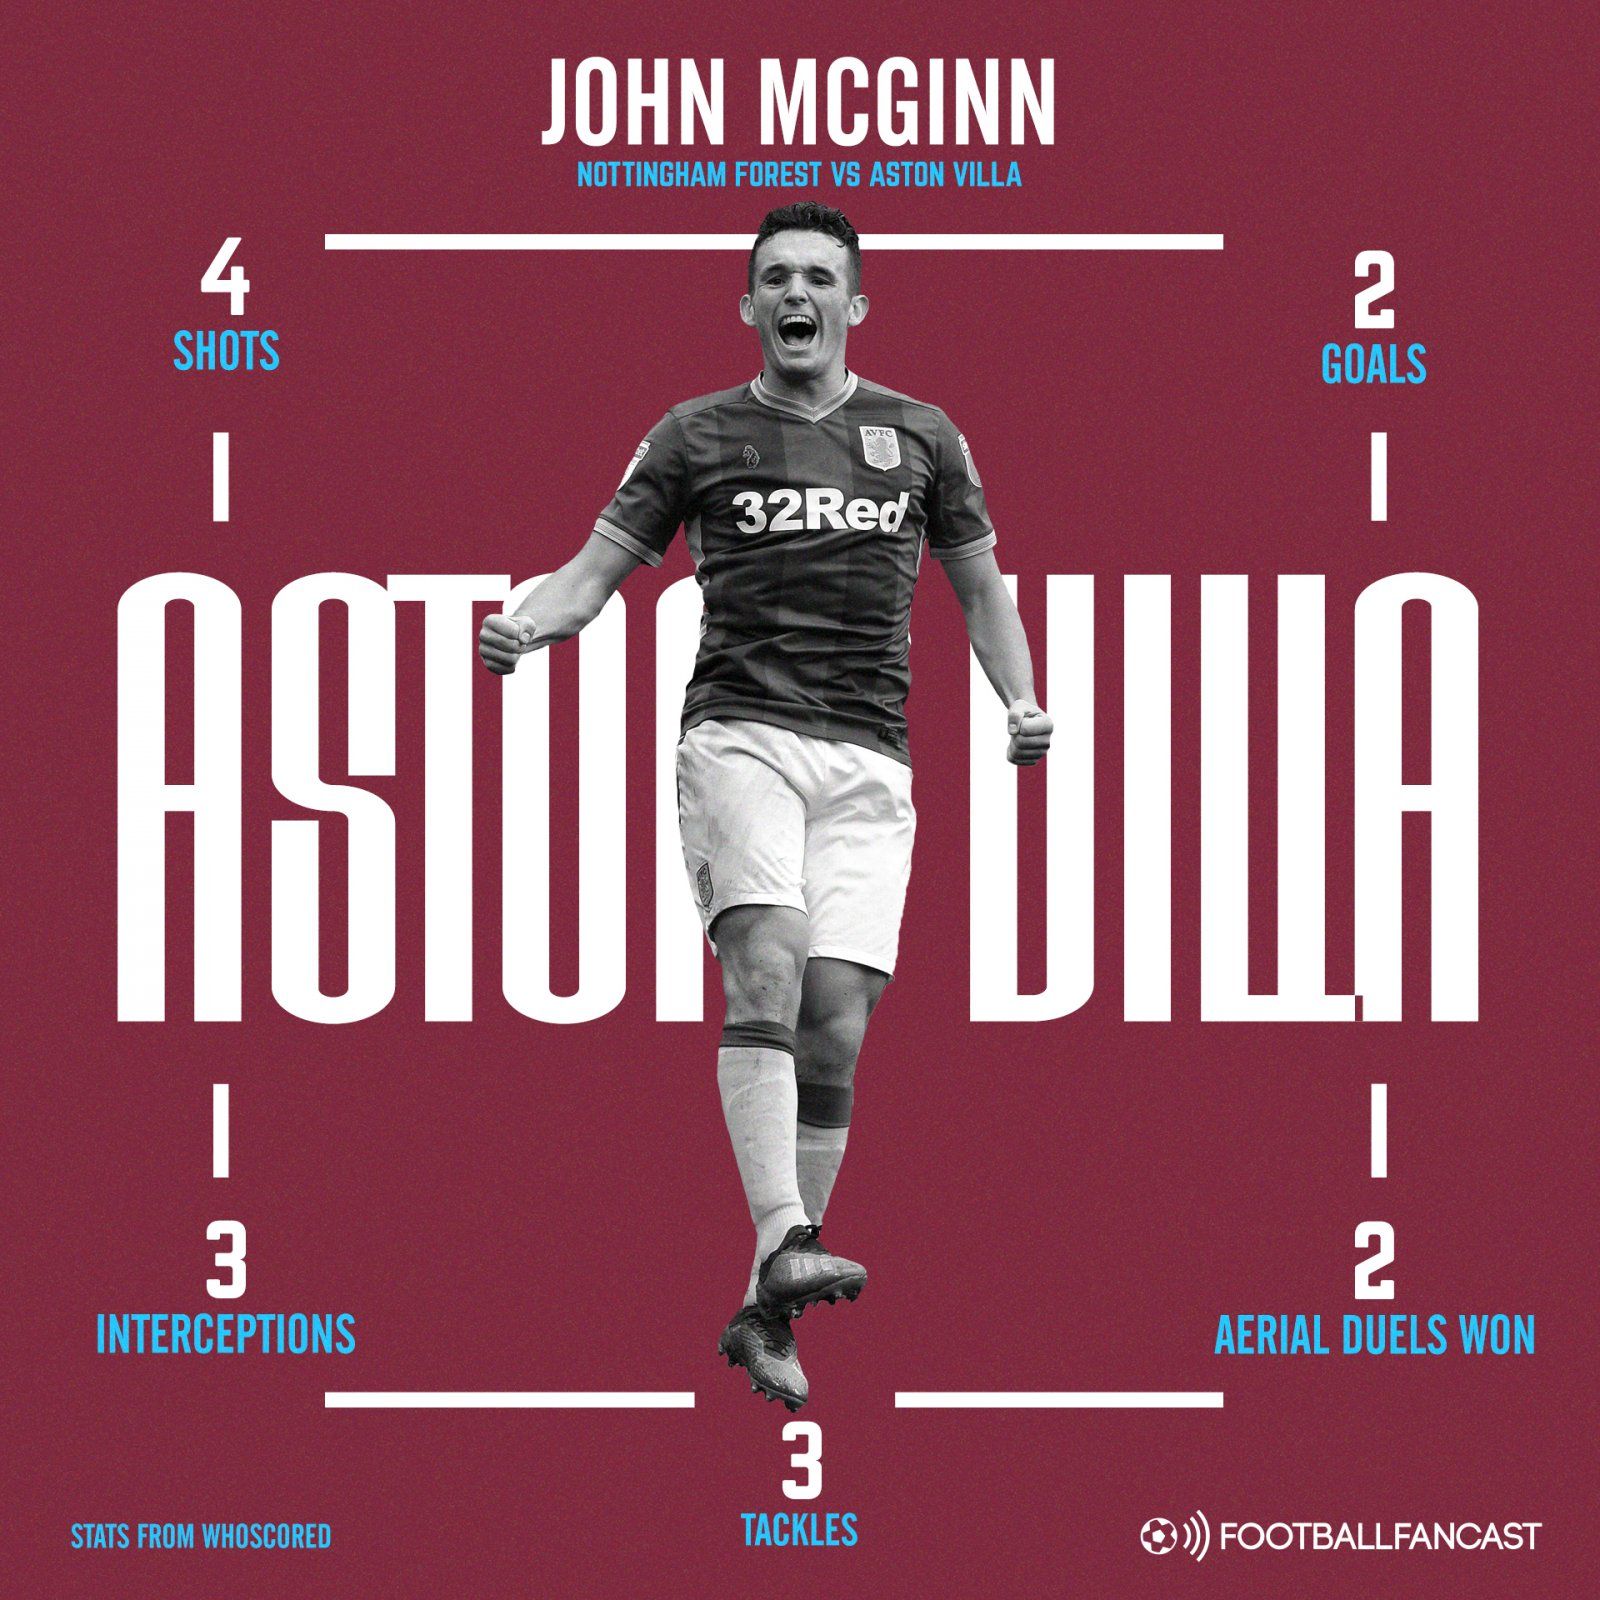 Aston Villa midfielder John McGinn's stats vs Nottingham Forest